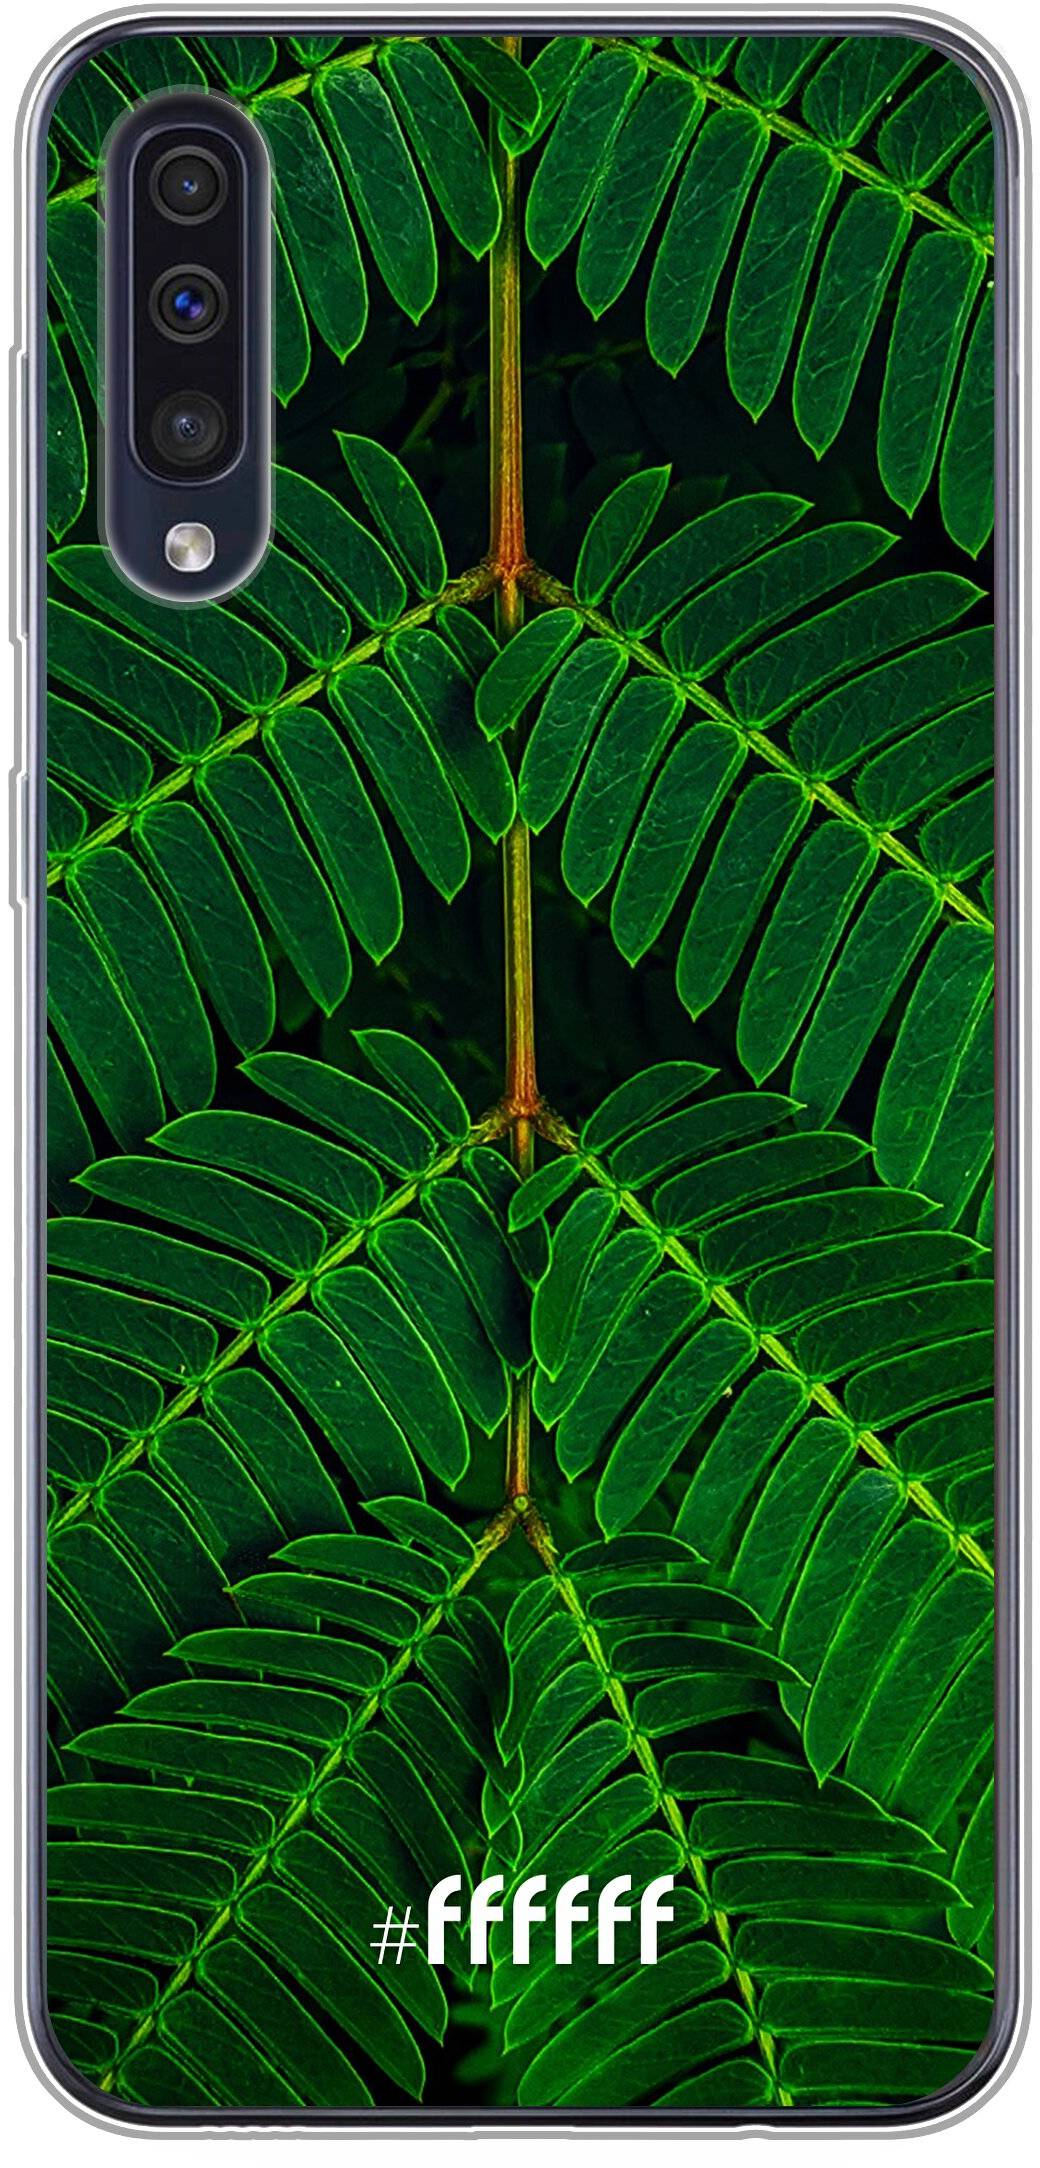 Symmetric Plants Galaxy A50s